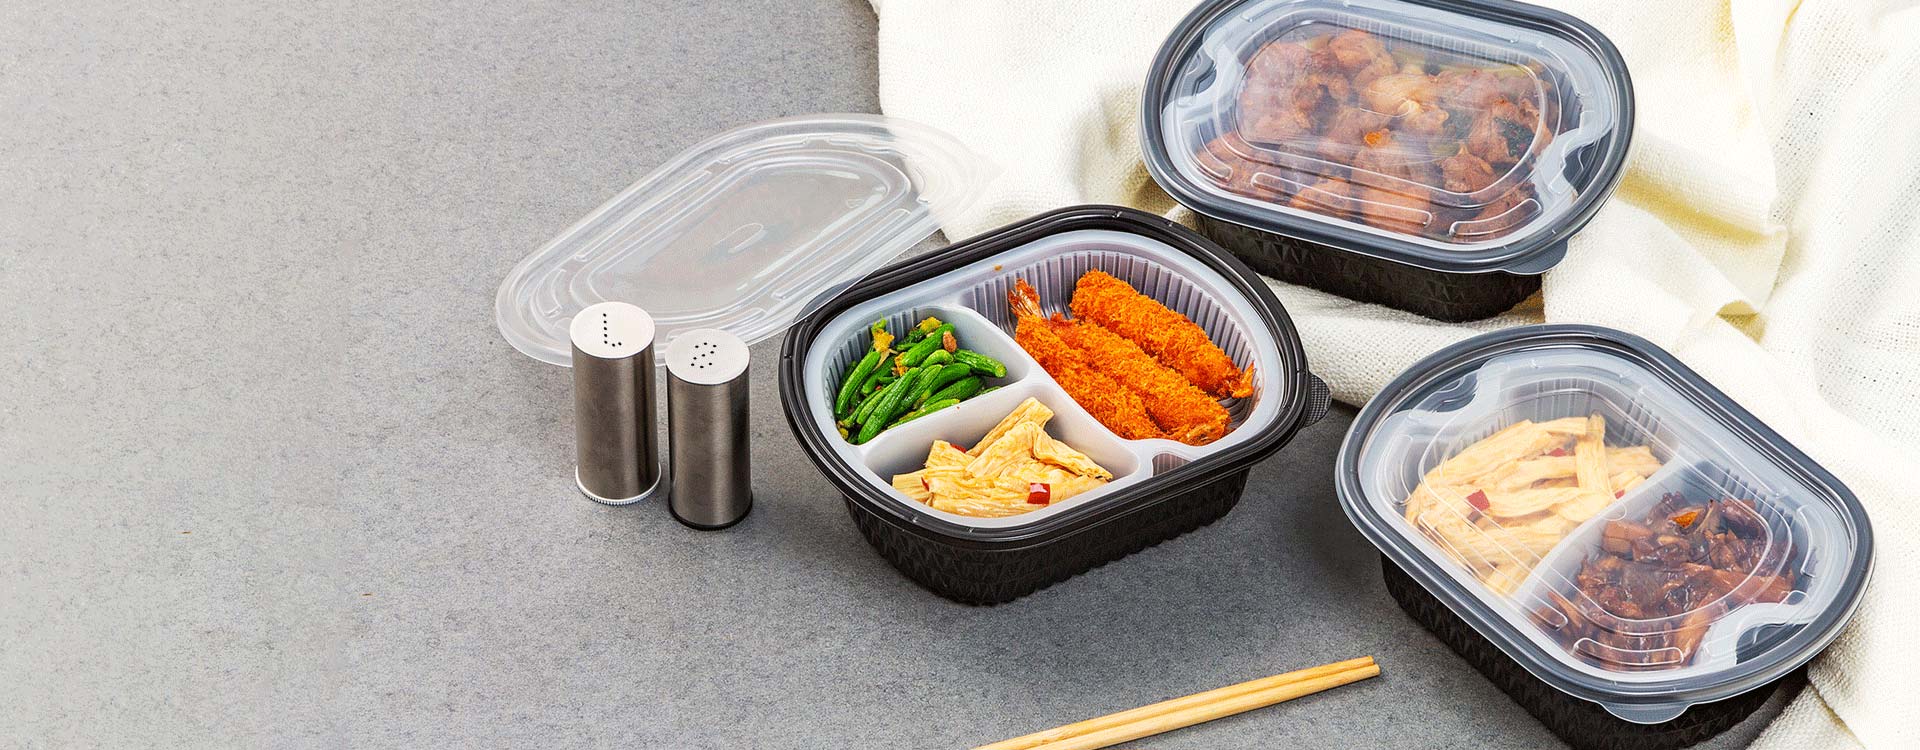 https://www.lesuipackaging.com/uploads/image/20221116/10/plastic-food-container.jpg